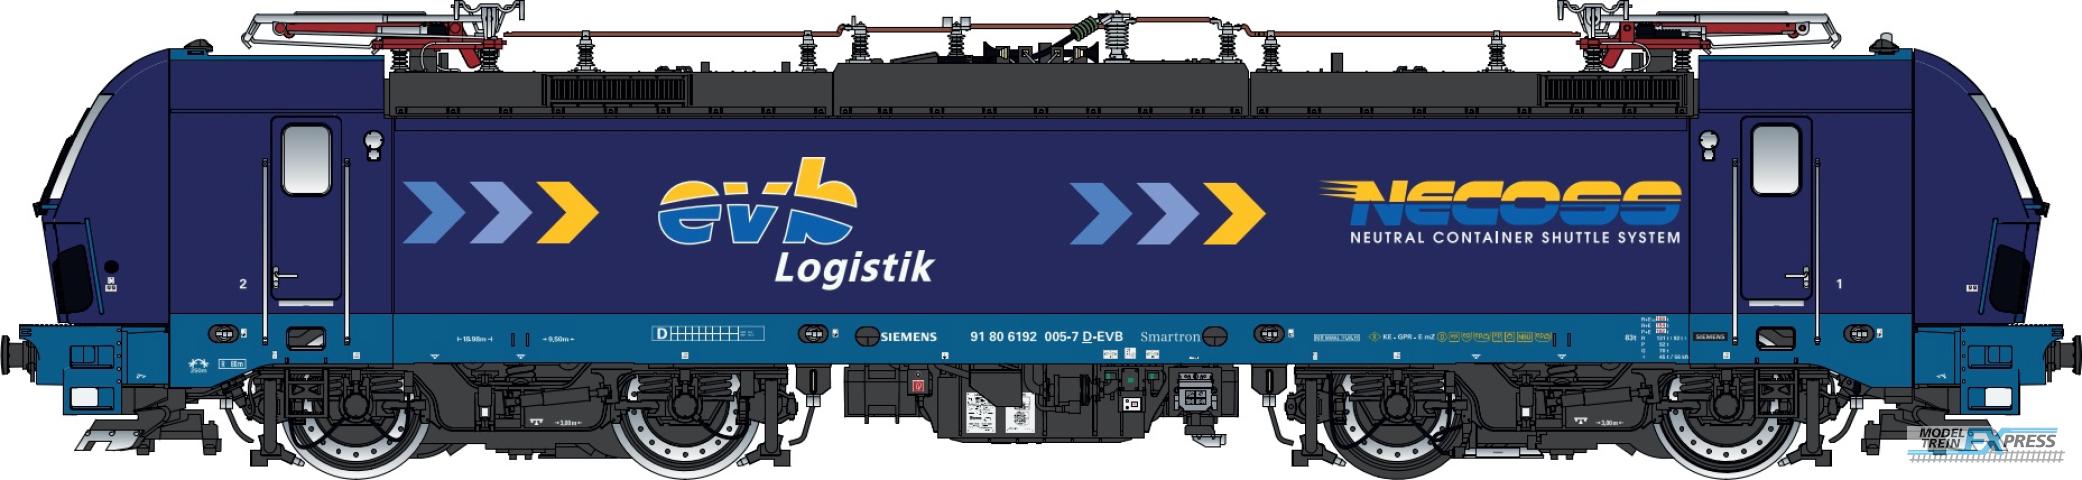 LS Models 16652S Smartron, Eisenbahnen und Verkehrsbetriebe Elbe-Weser (EVB Logistik)  /  Ep. VI  /  ---  /  HO  /  AC SOUND  /  1 P.